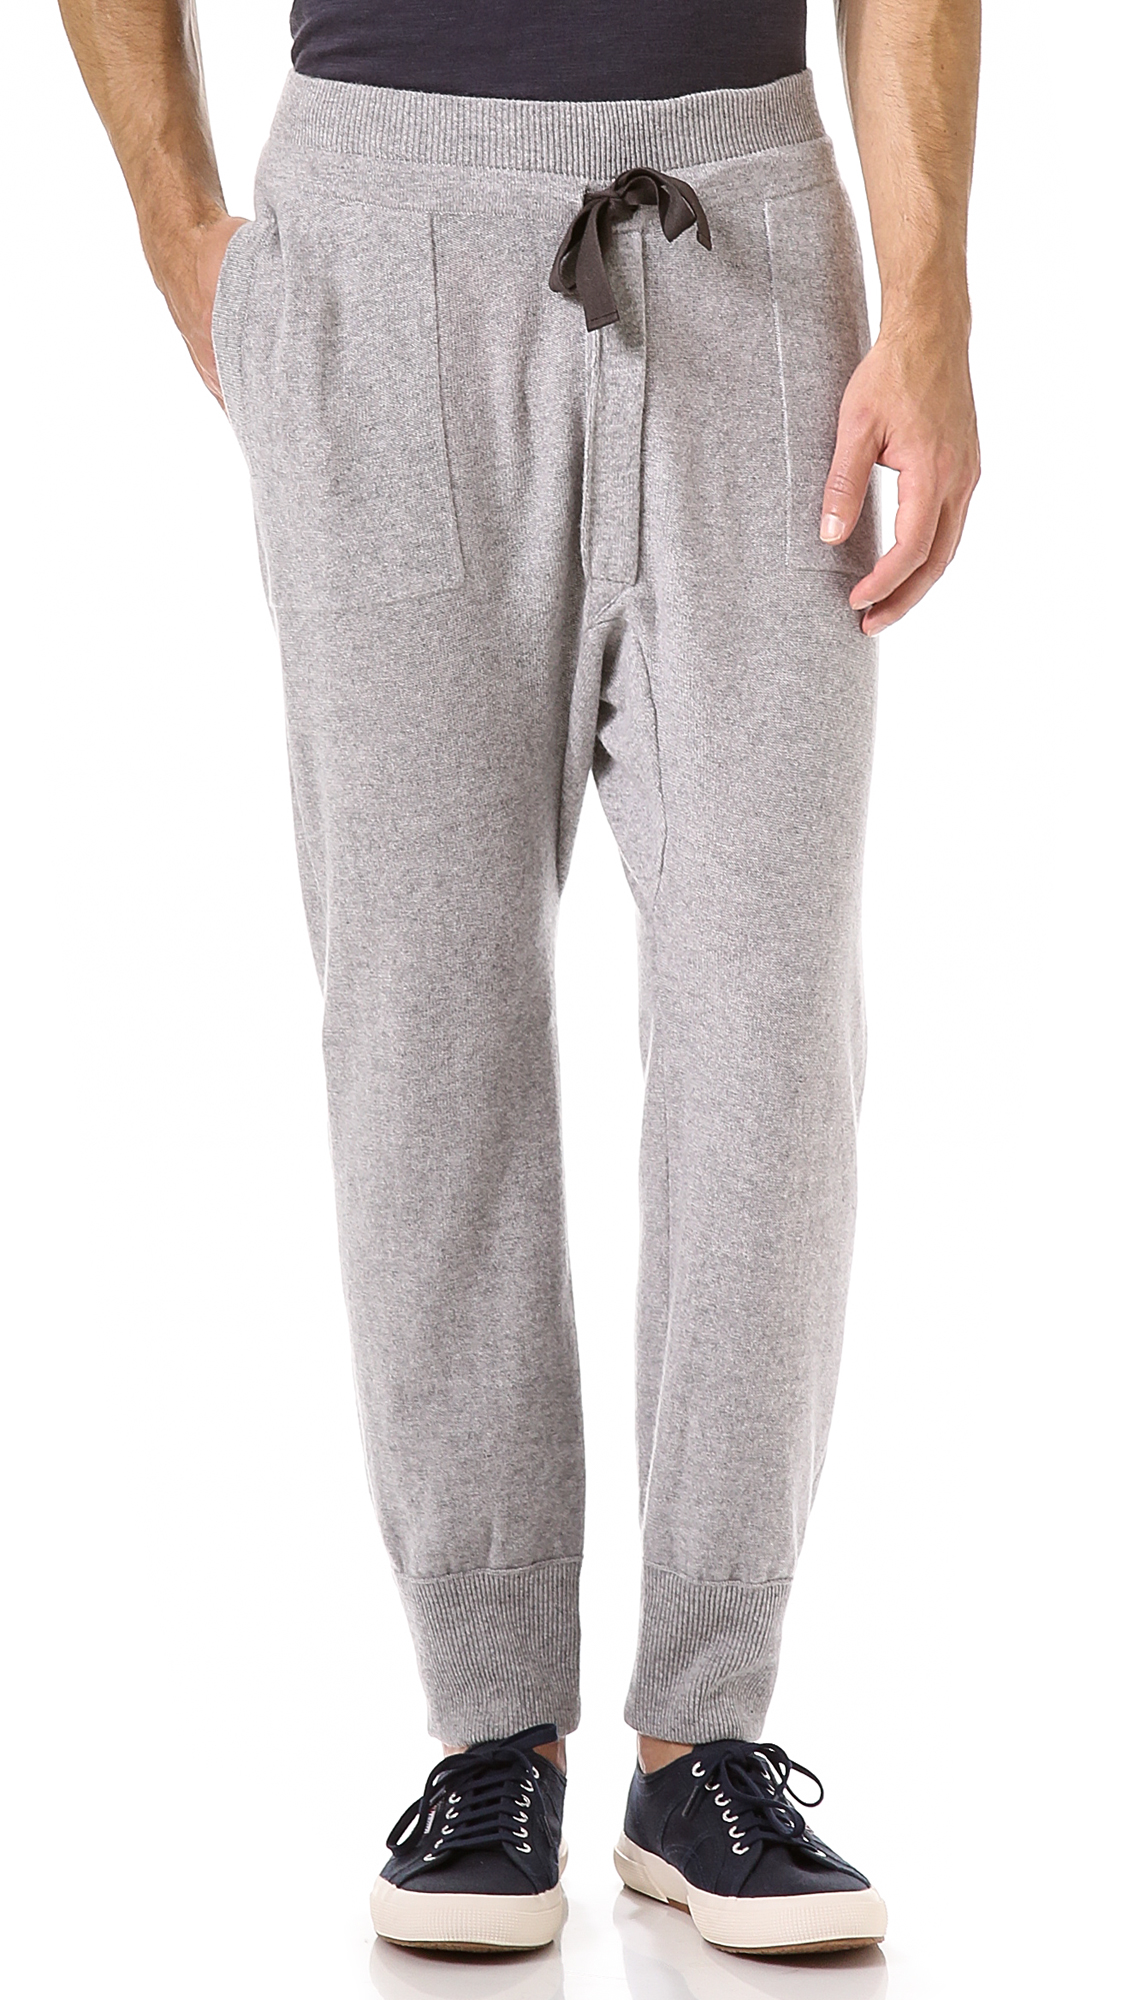 Lyst - Inhabit Cashmere Sweatpants in Gray for Men